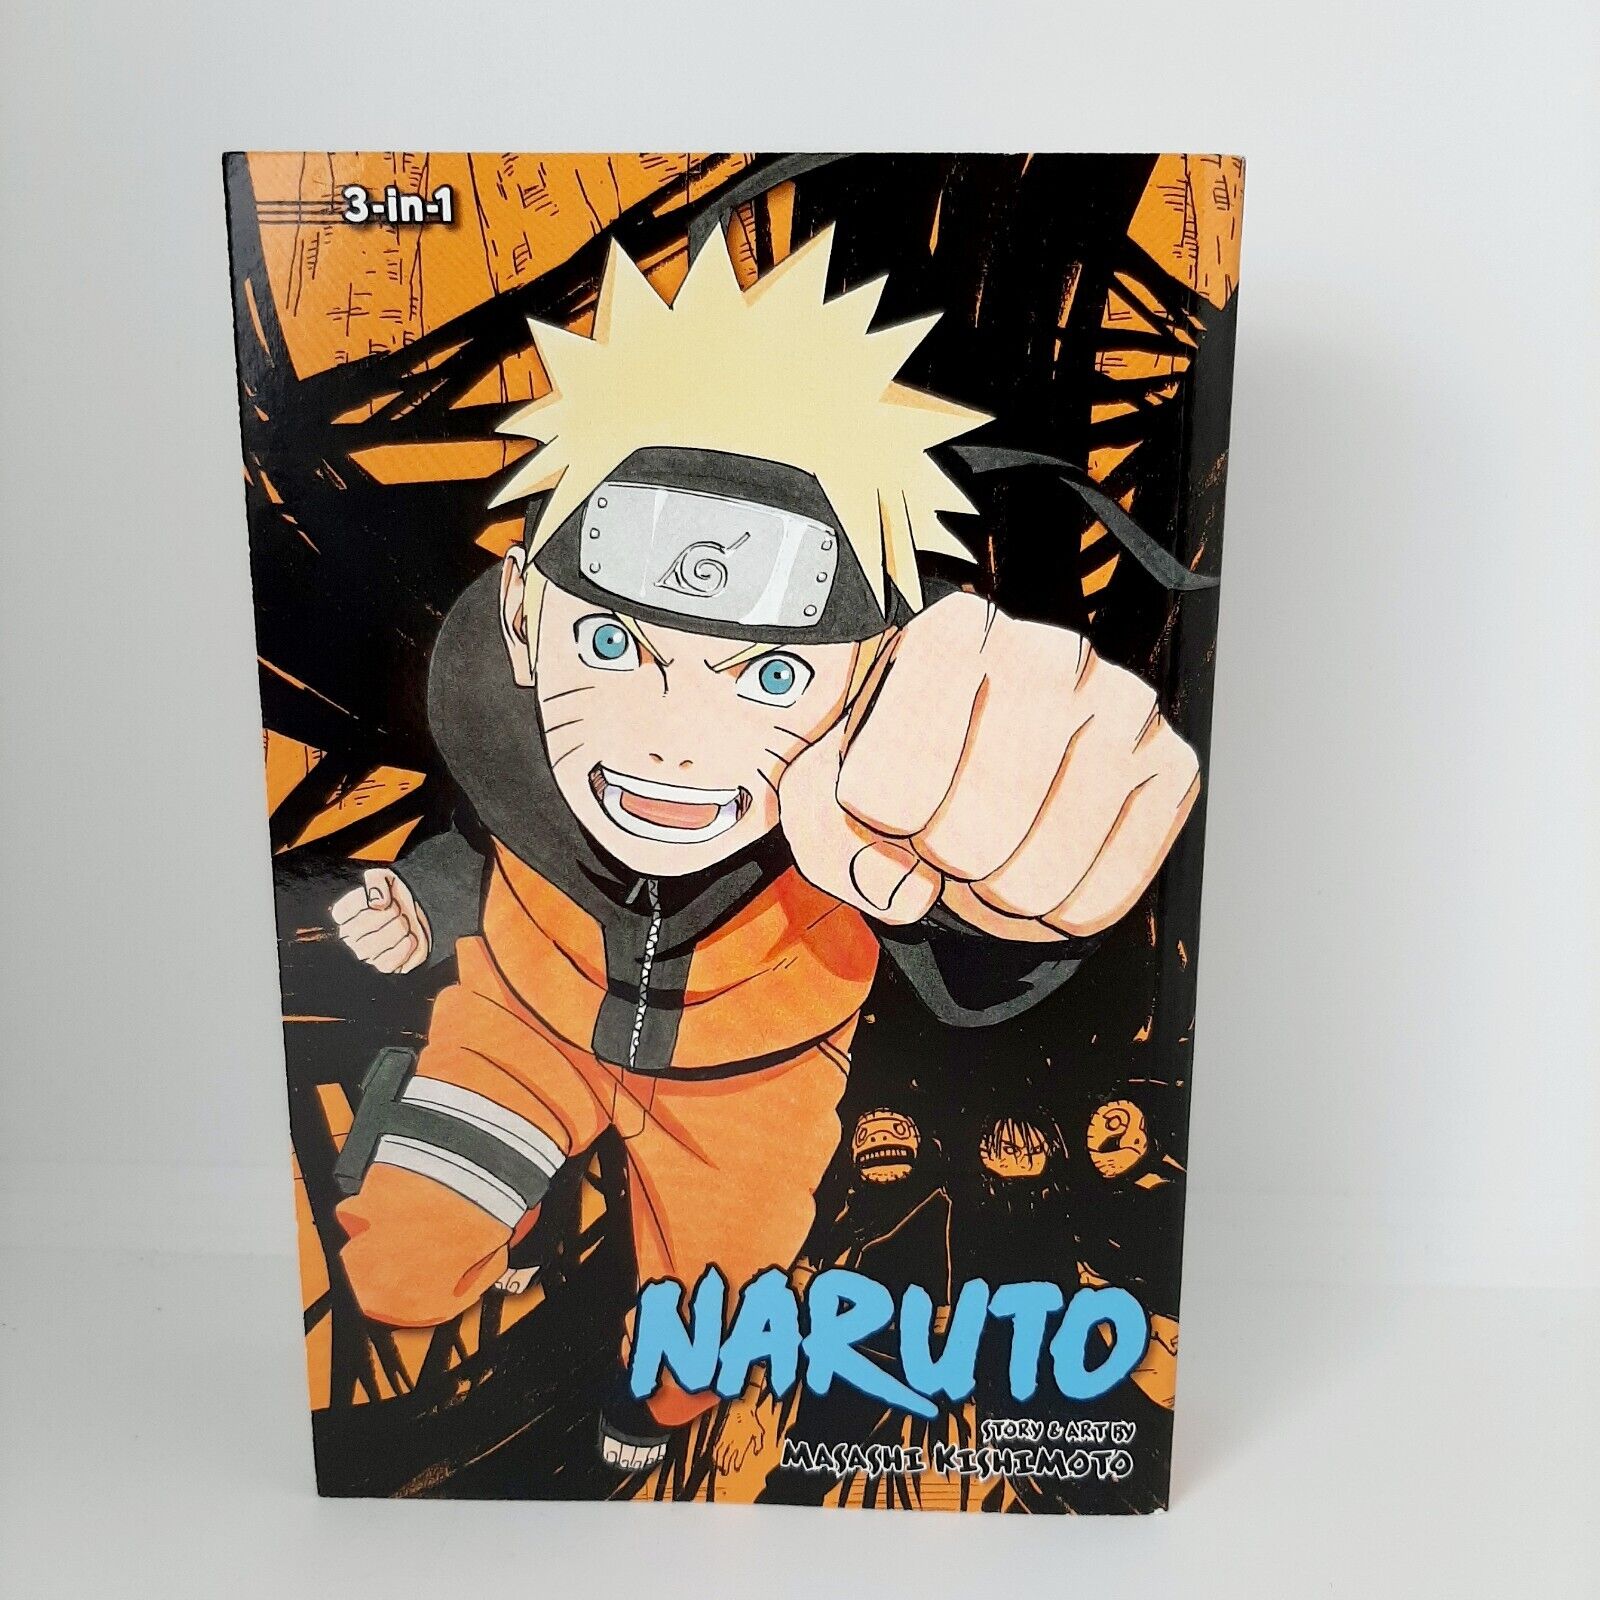 Naruto (3-In-1 Edition) Manga Vol. 13 Includes 37 38 39 by Masashi Kishimoto